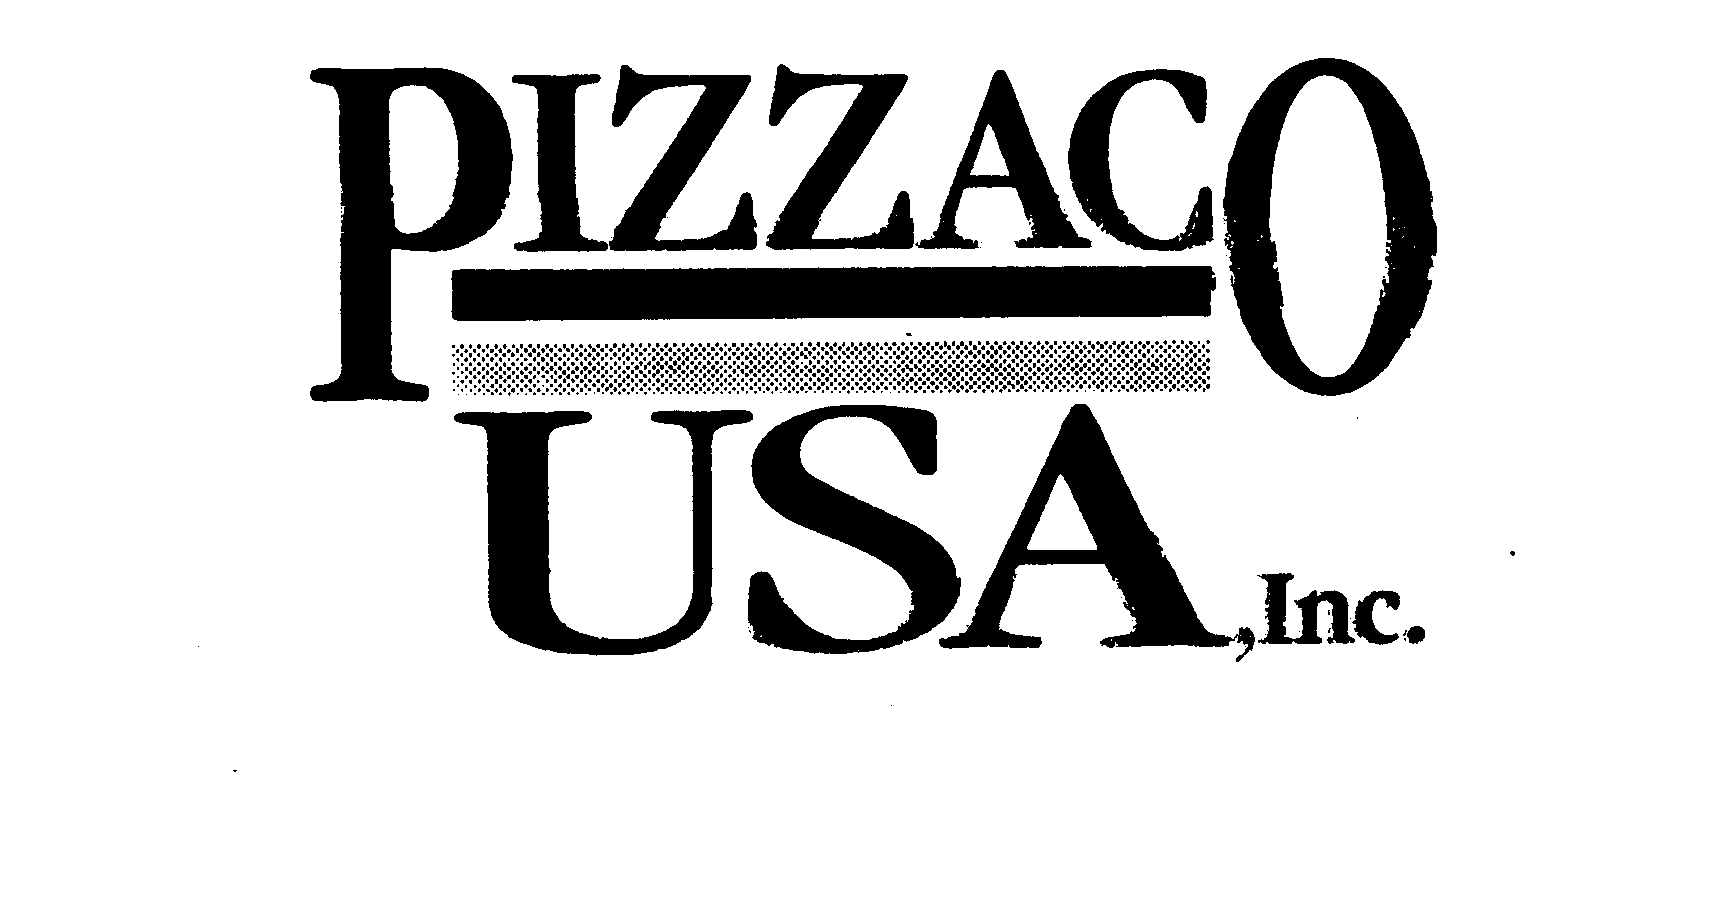  PIZZACO USA, INC.